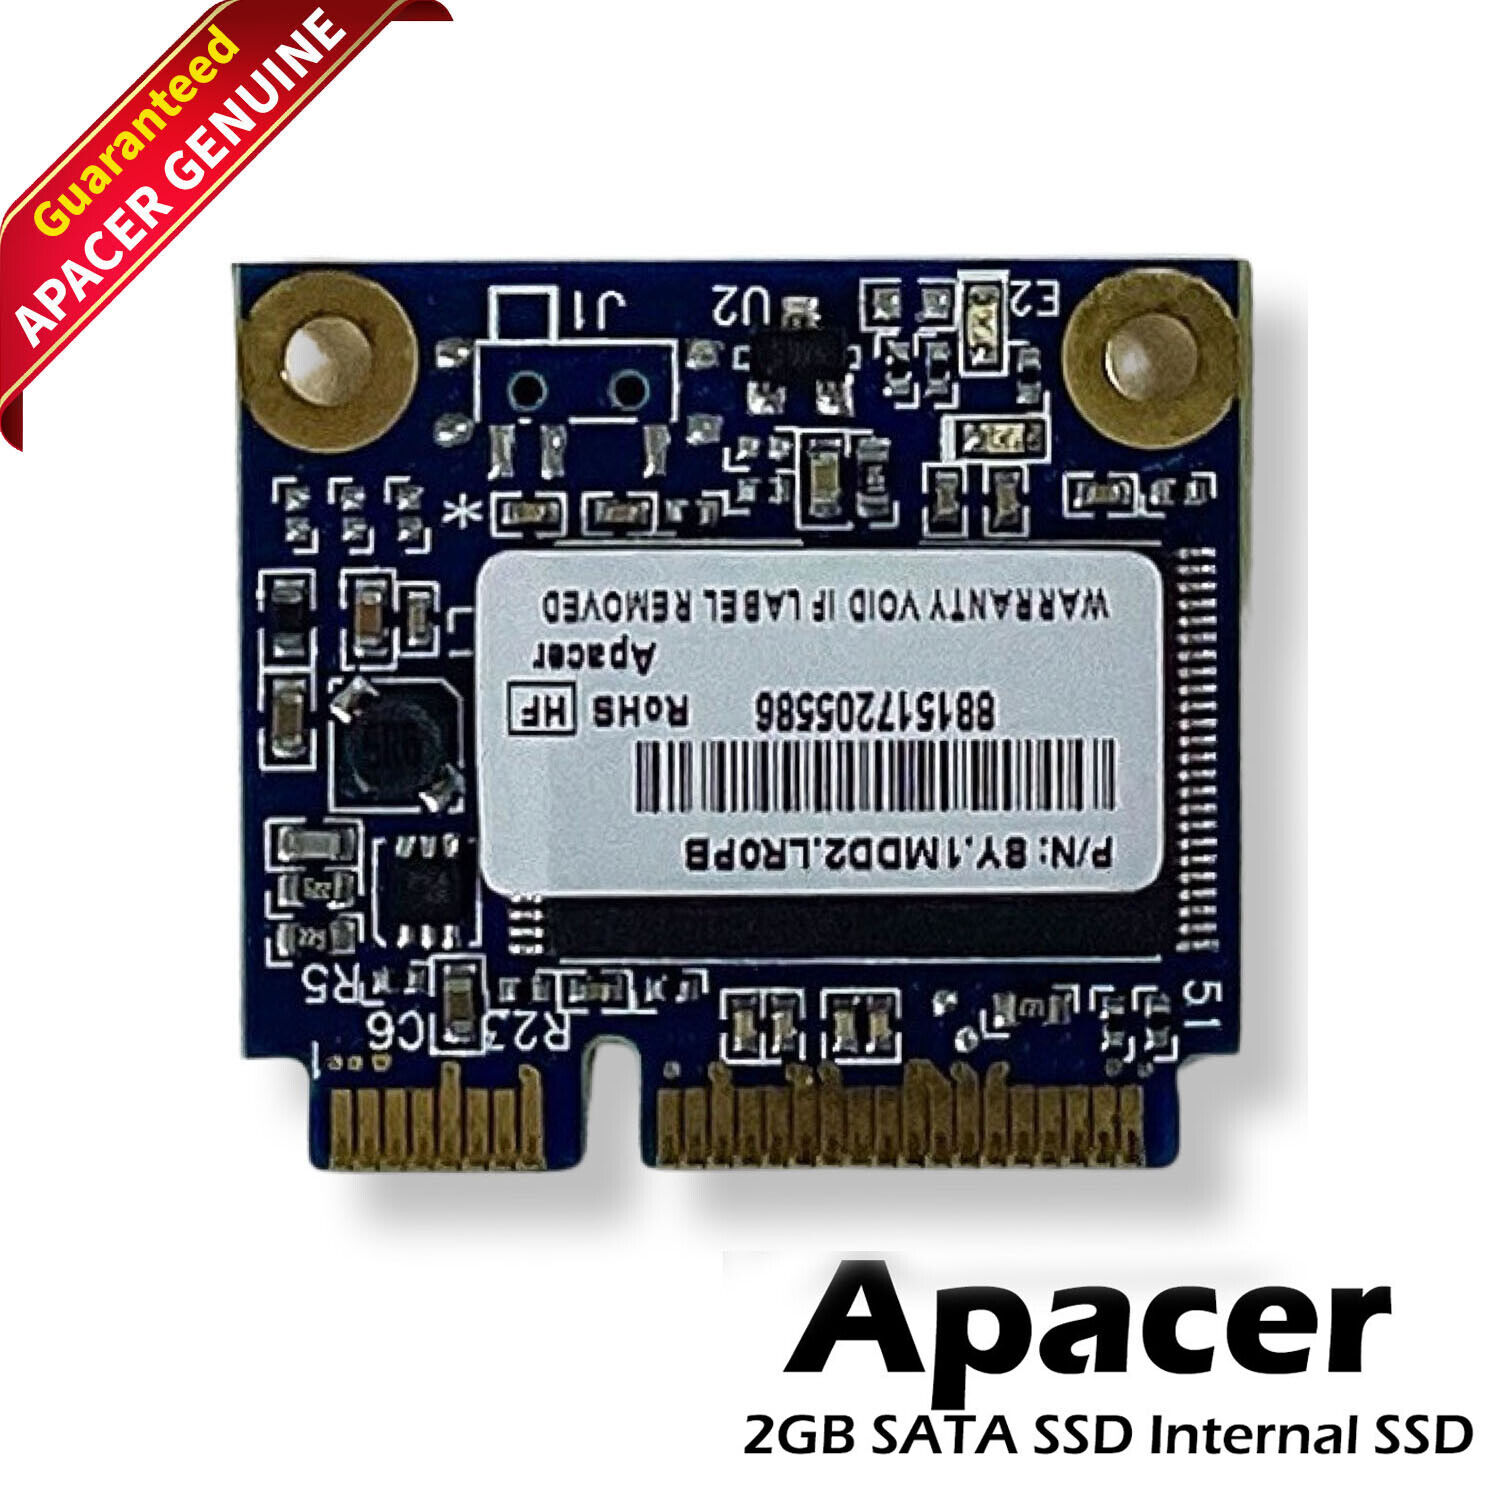 APACER 8Y.1MDD2.LR0PB 16GB SSD 8C 2.5 in MLC SATA Solid State Hard Drive VRRJP